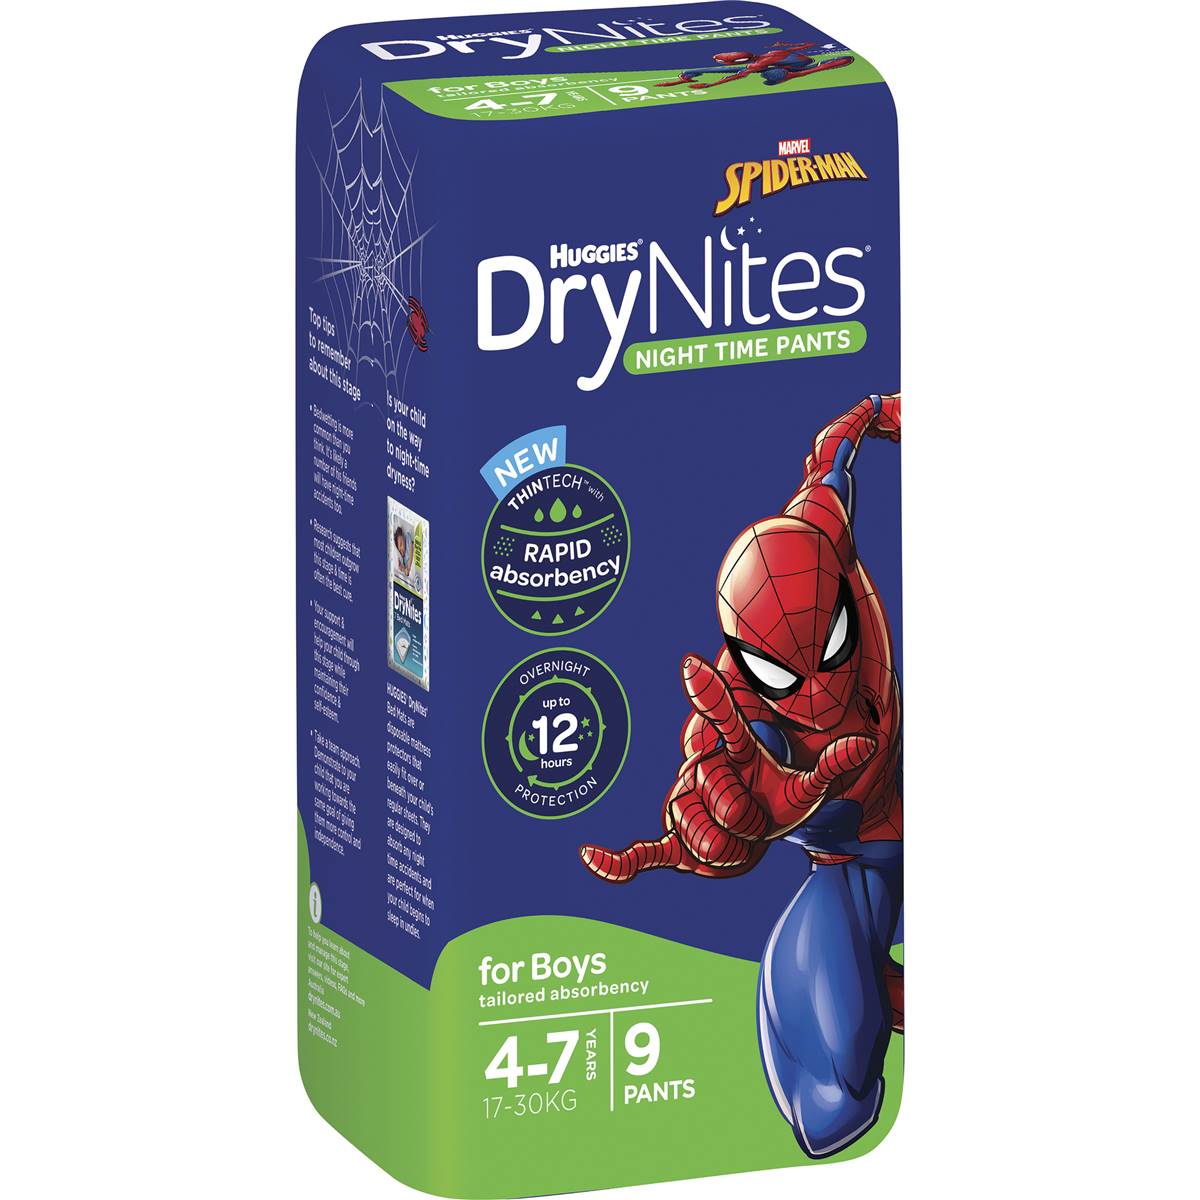 Huggies Drynites Night Time Pants For Boys 4-7 Years (17-30kg) 9 Pack